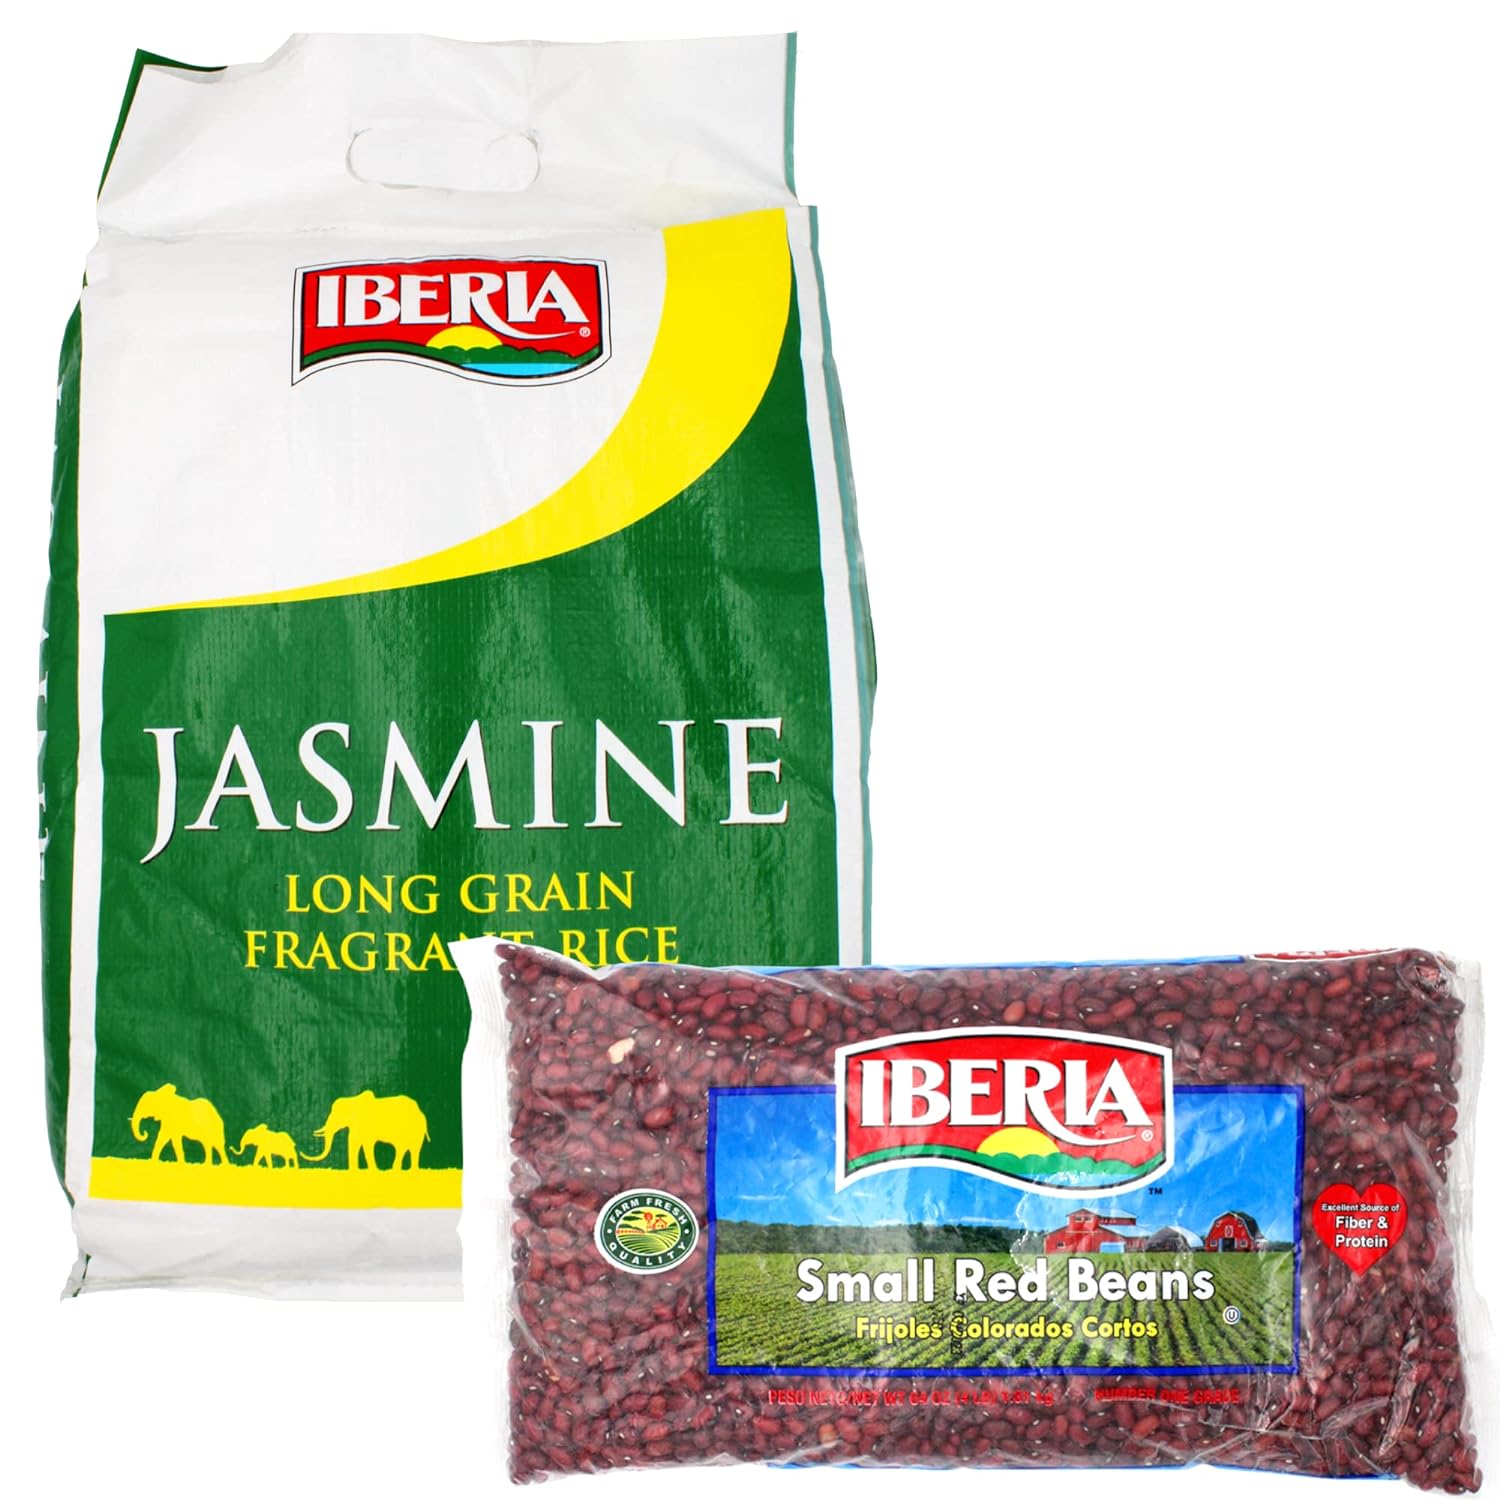 Iberia Jasmine Long Grain Fragrant Rice, 18 lb. + Ibeia Small Red Beans, 4 lb